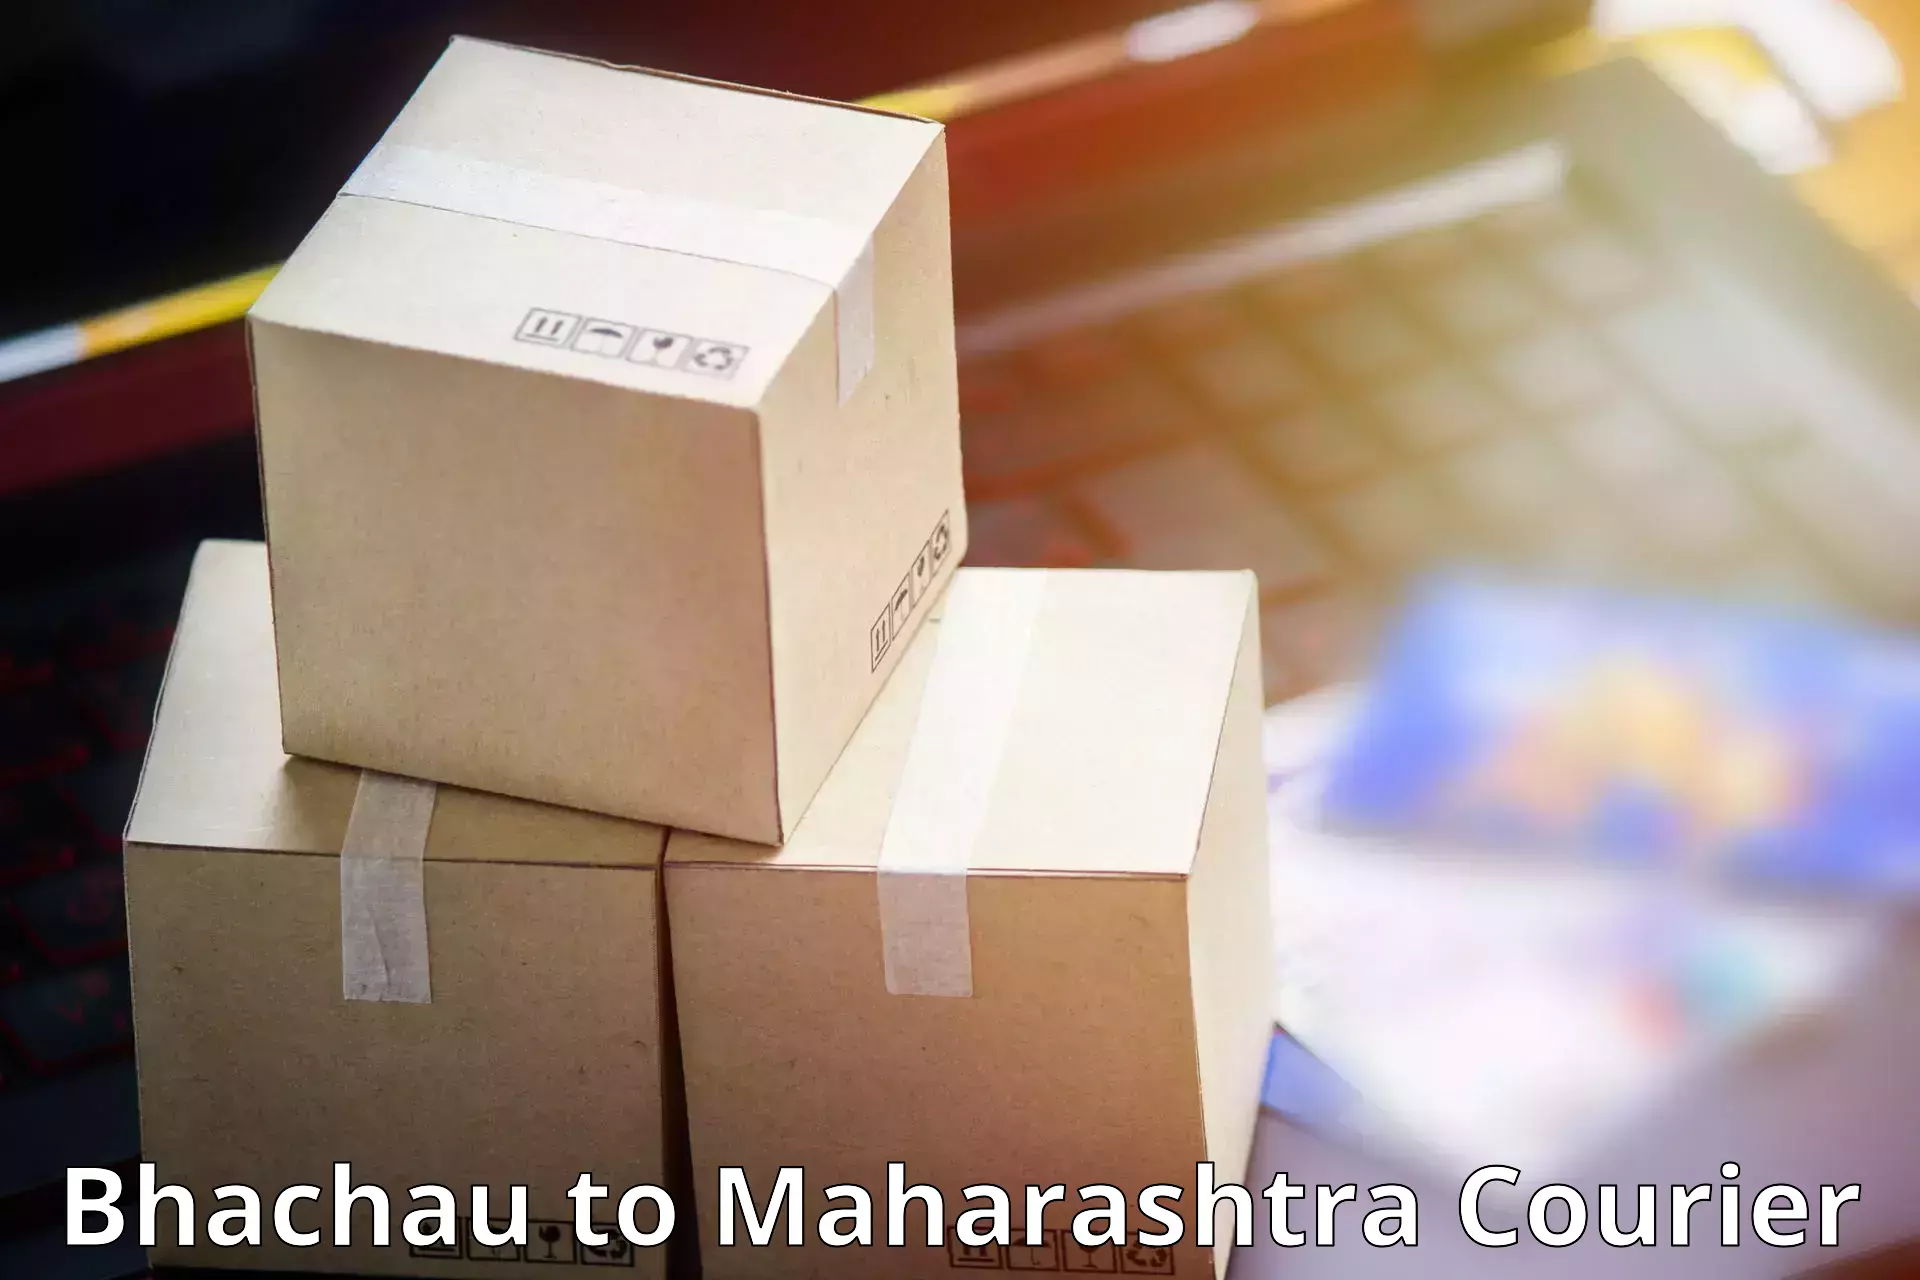 Nationwide parcel services Bhachau to Lonar